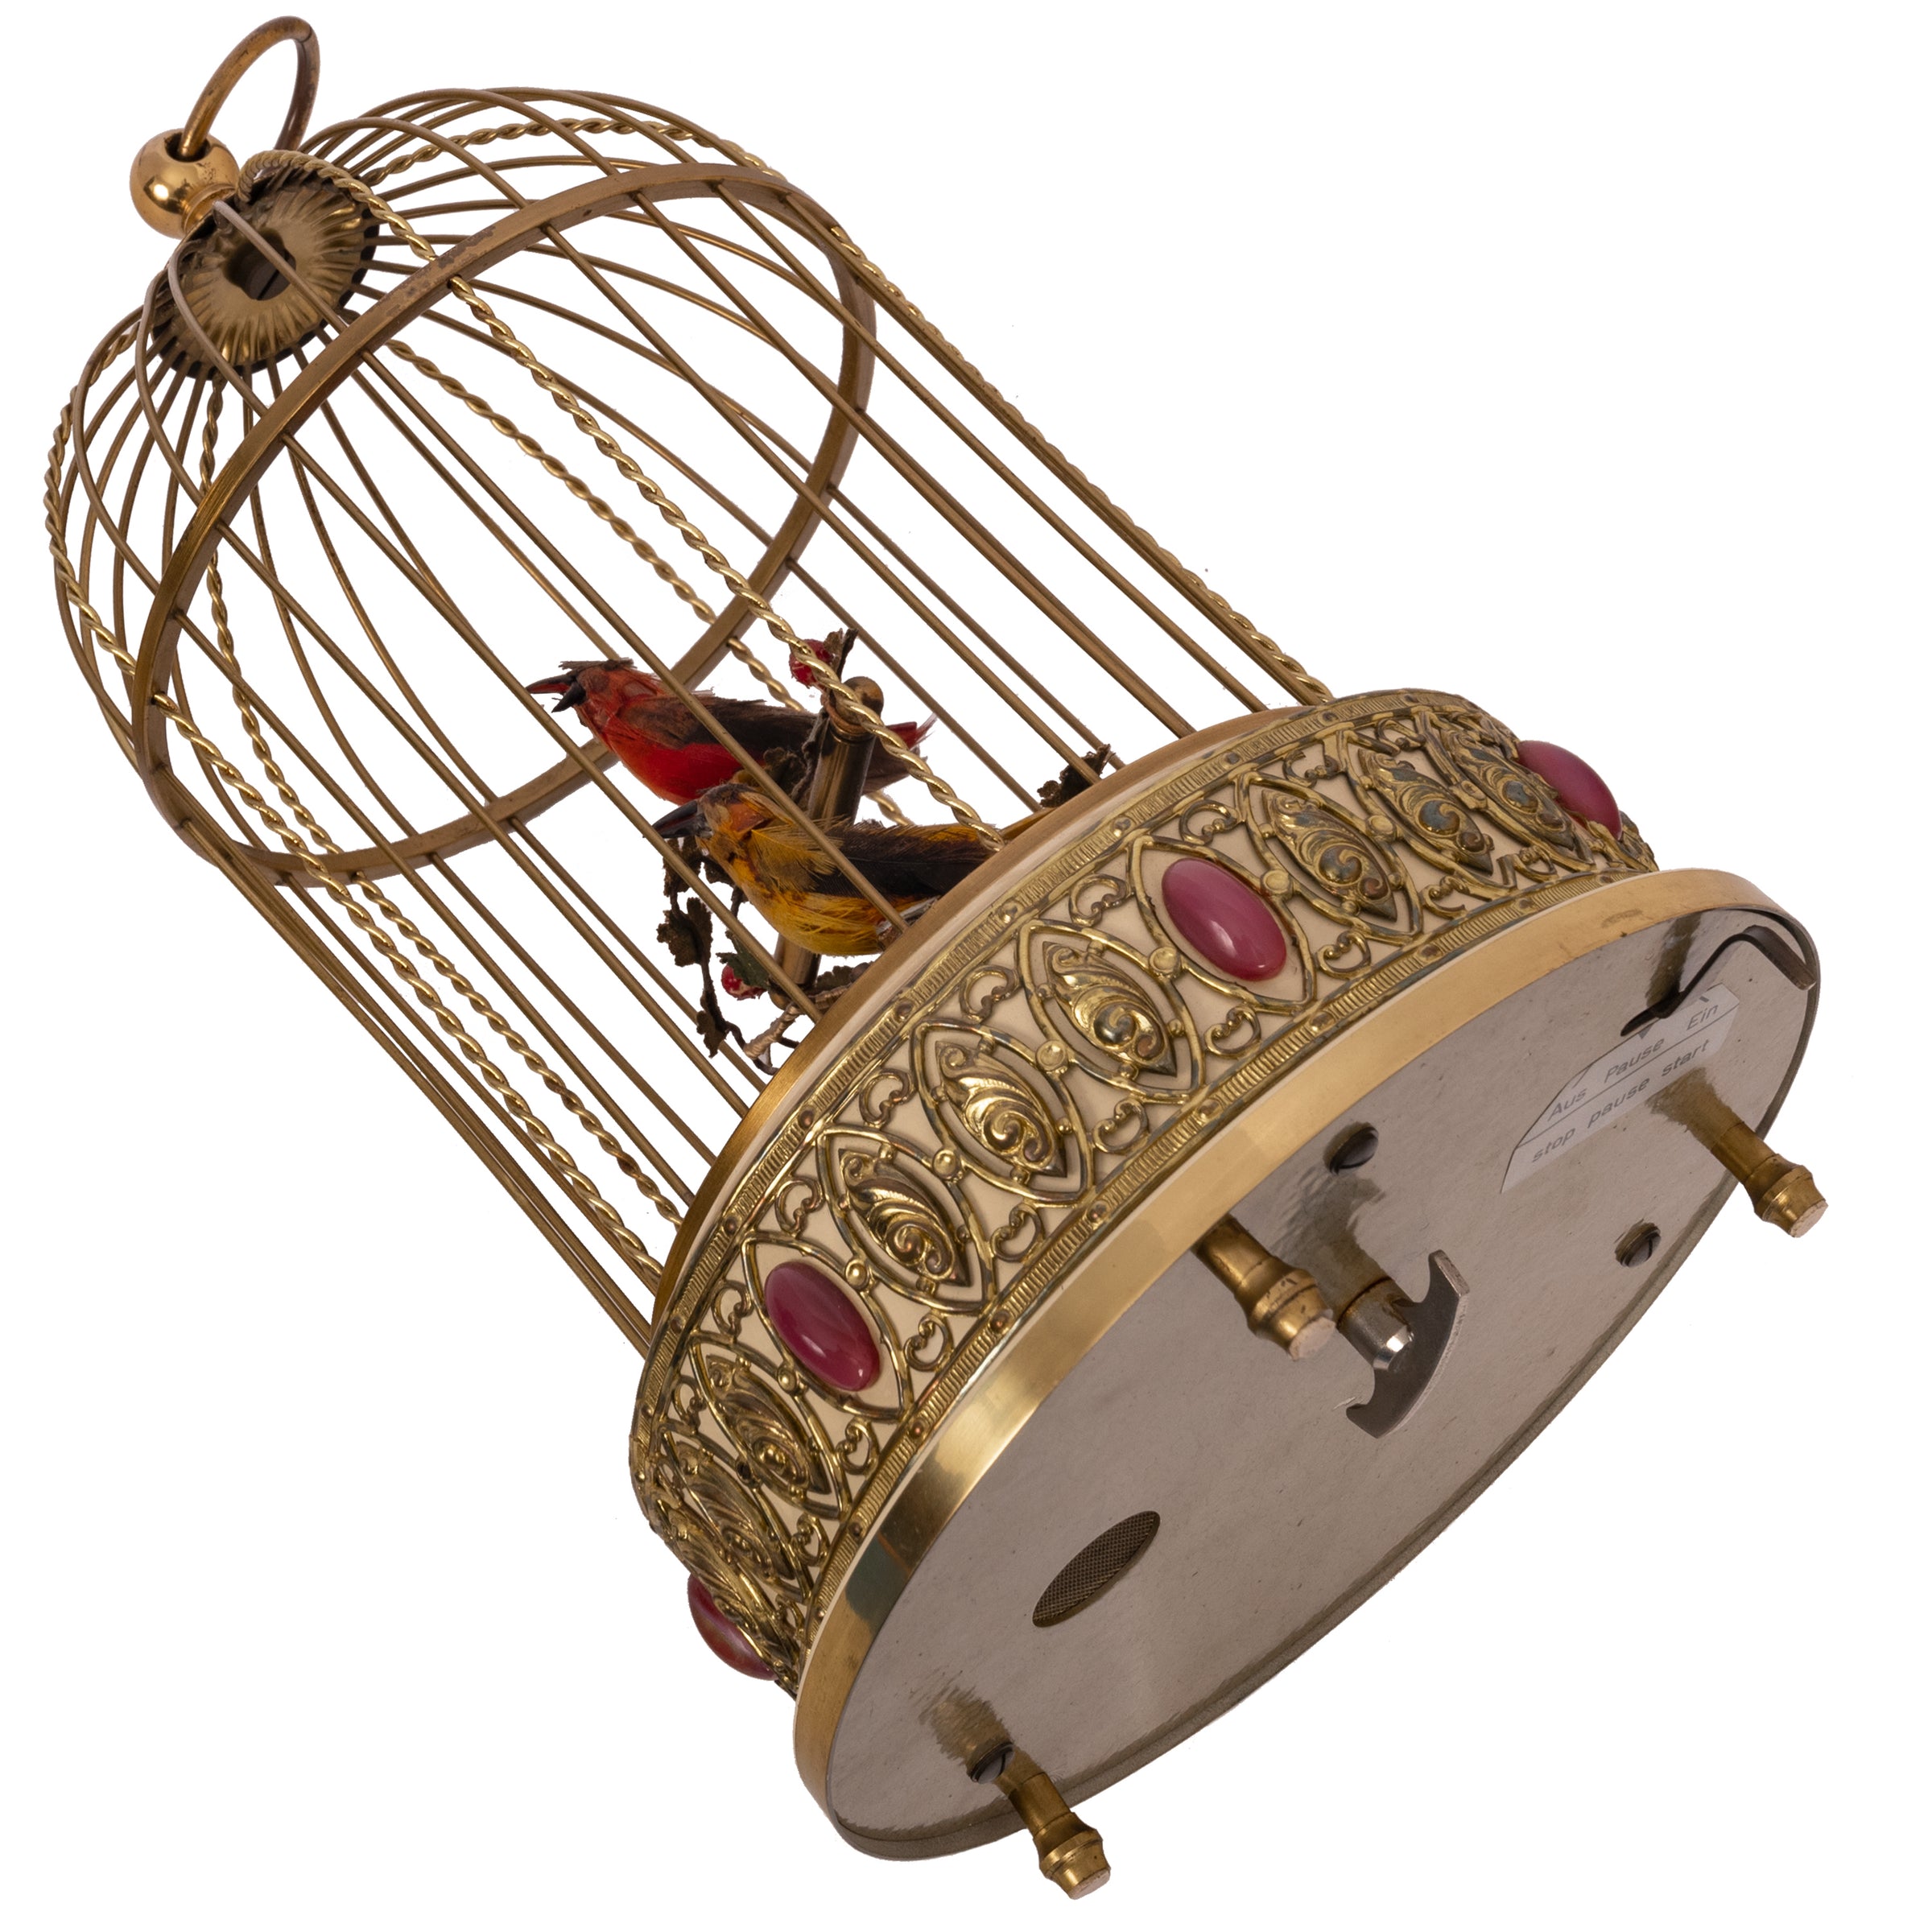 Vintage West German Music Box, Brass Bird Cage with Animated Singing Birds